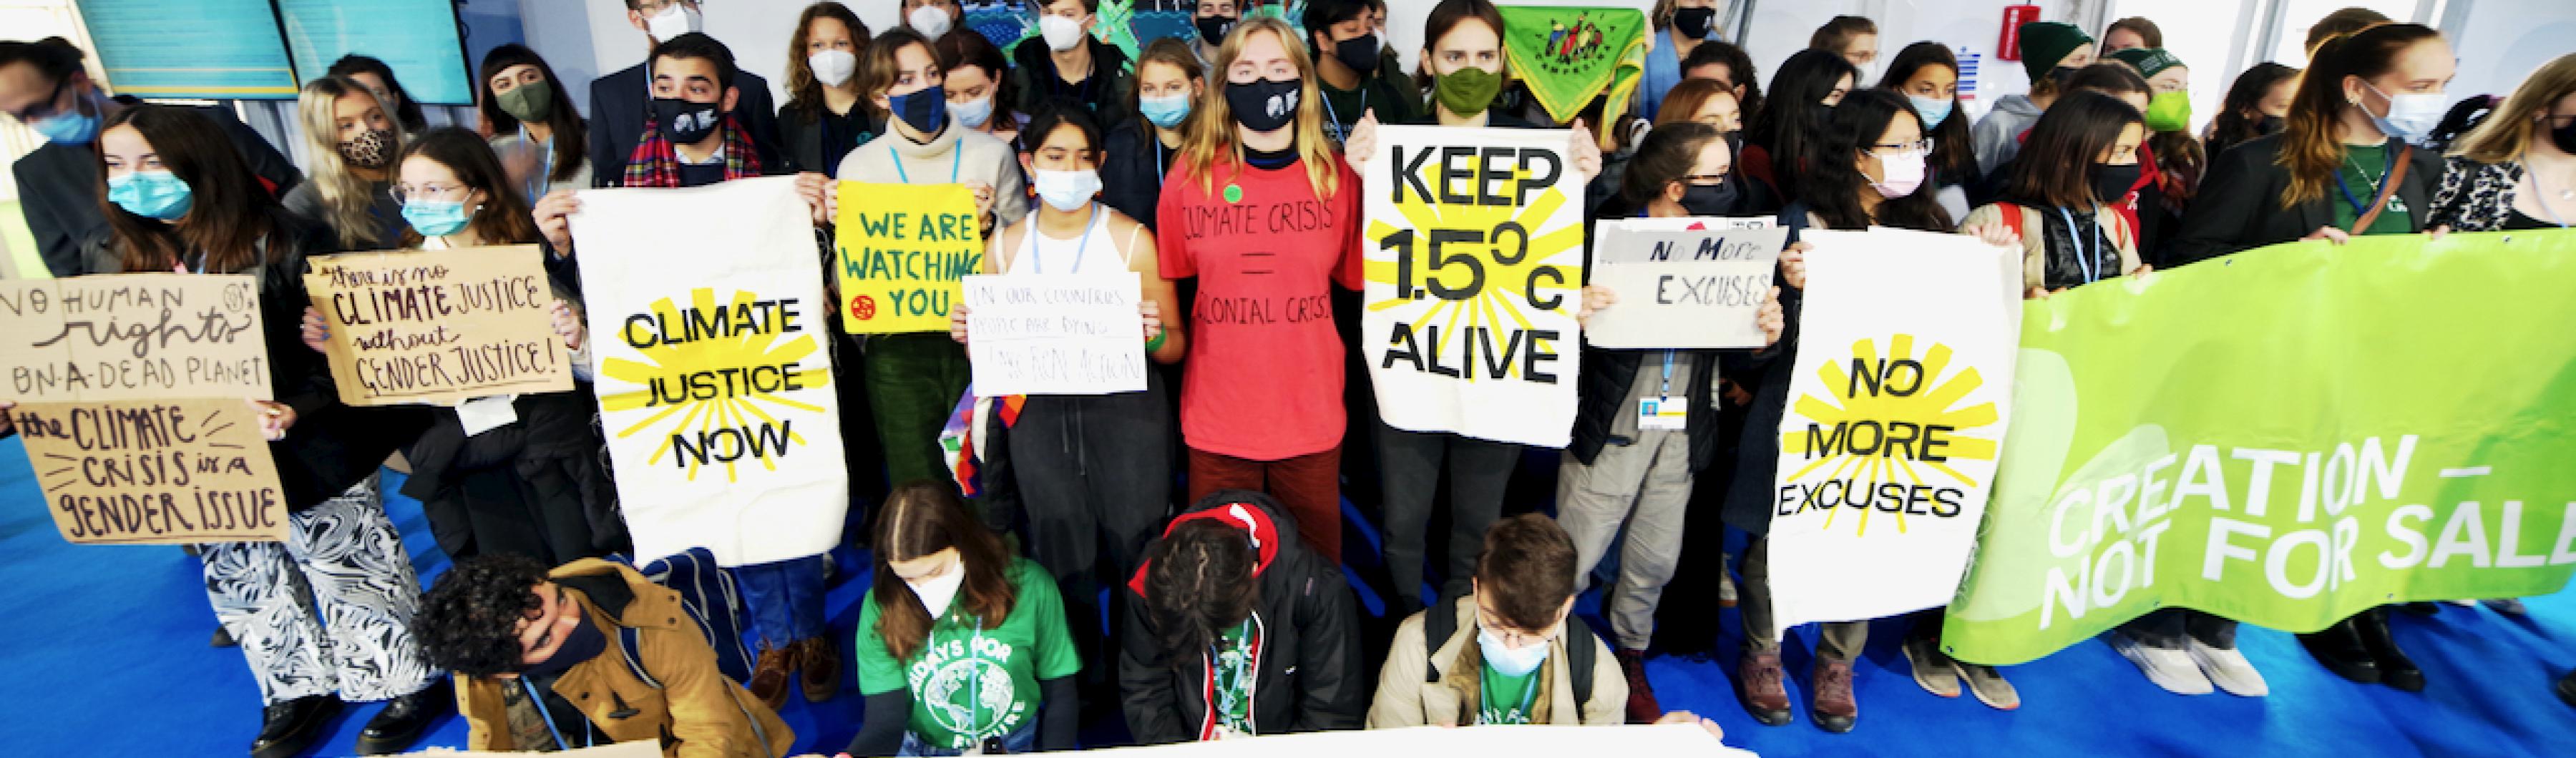 Striker muda di COP26 di Glasgow. Richard Dixon / Teman Bumi Skotlandia